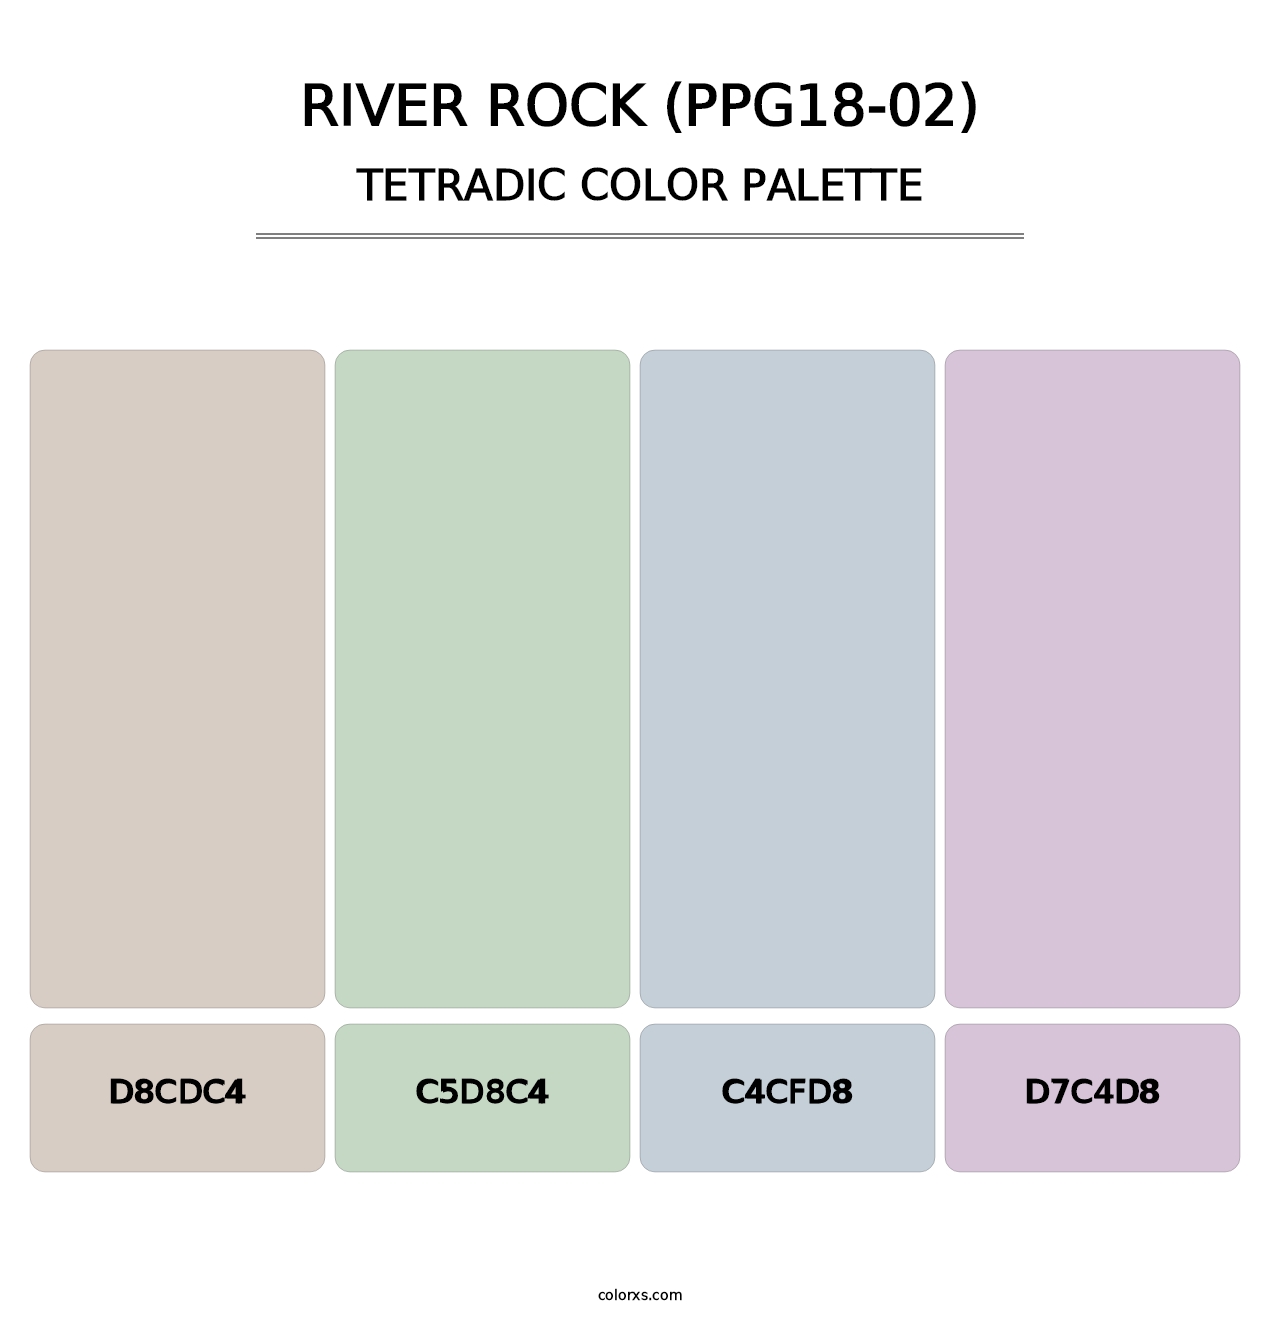 River Rock (PPG18-02) - Tetradic Color Palette